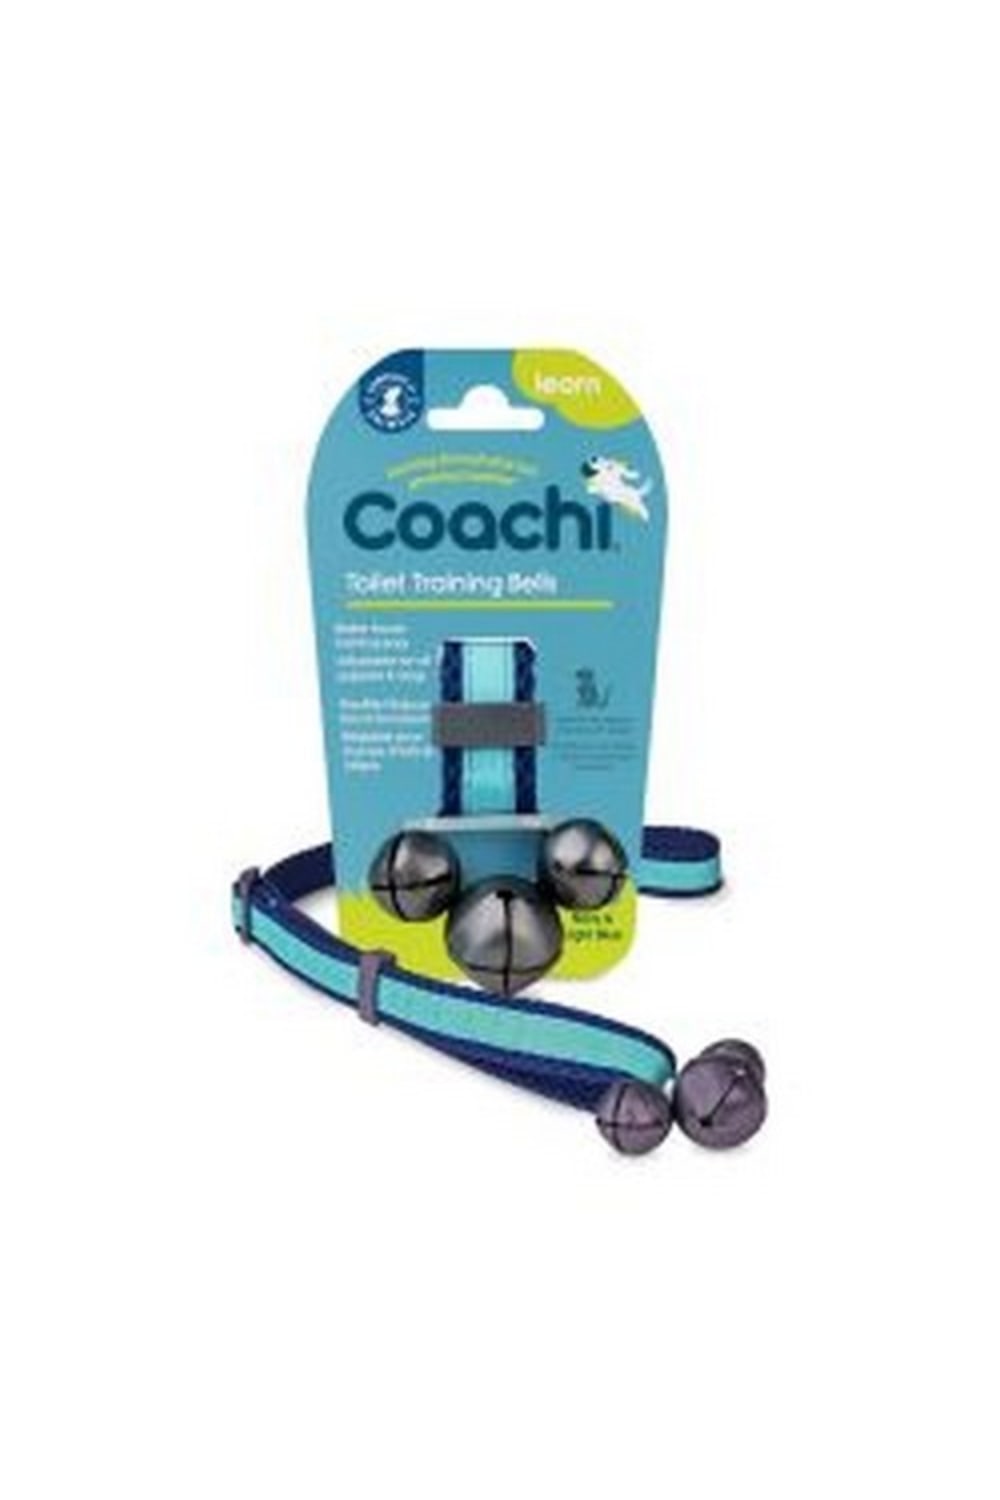 Coachi Dog Toilet Training Bell - Navy/Blue